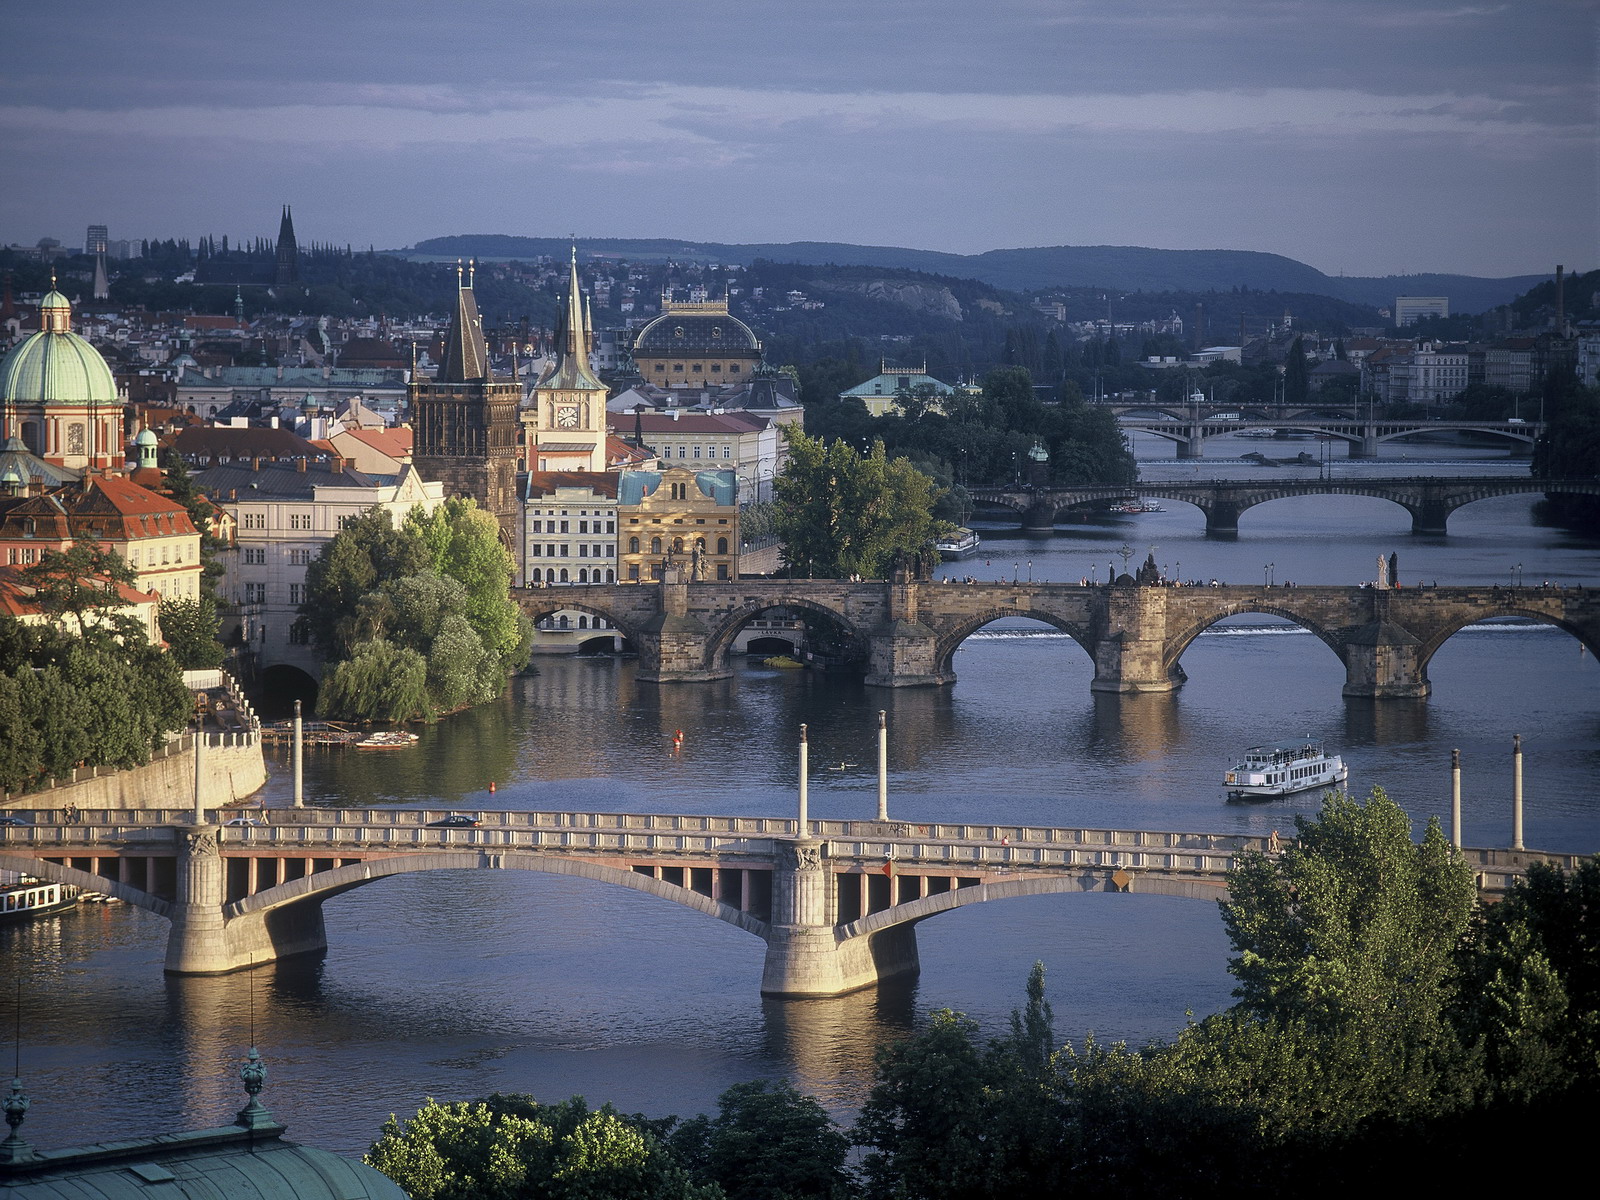 Prague Bridges Spanning the River Vltava